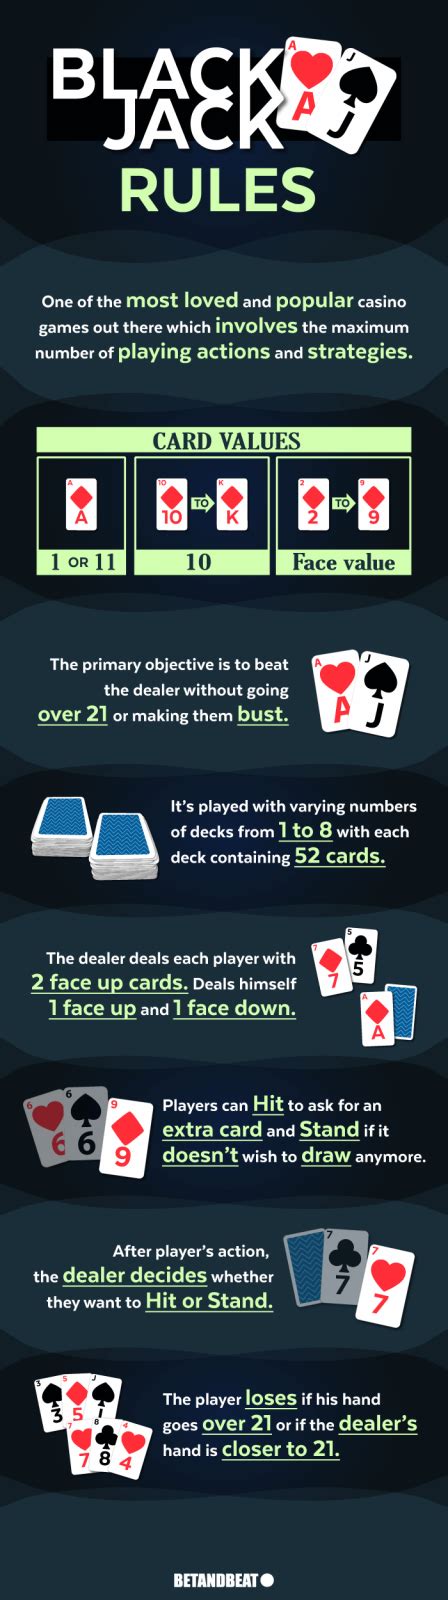 dealer casino blackjack rules fwmk